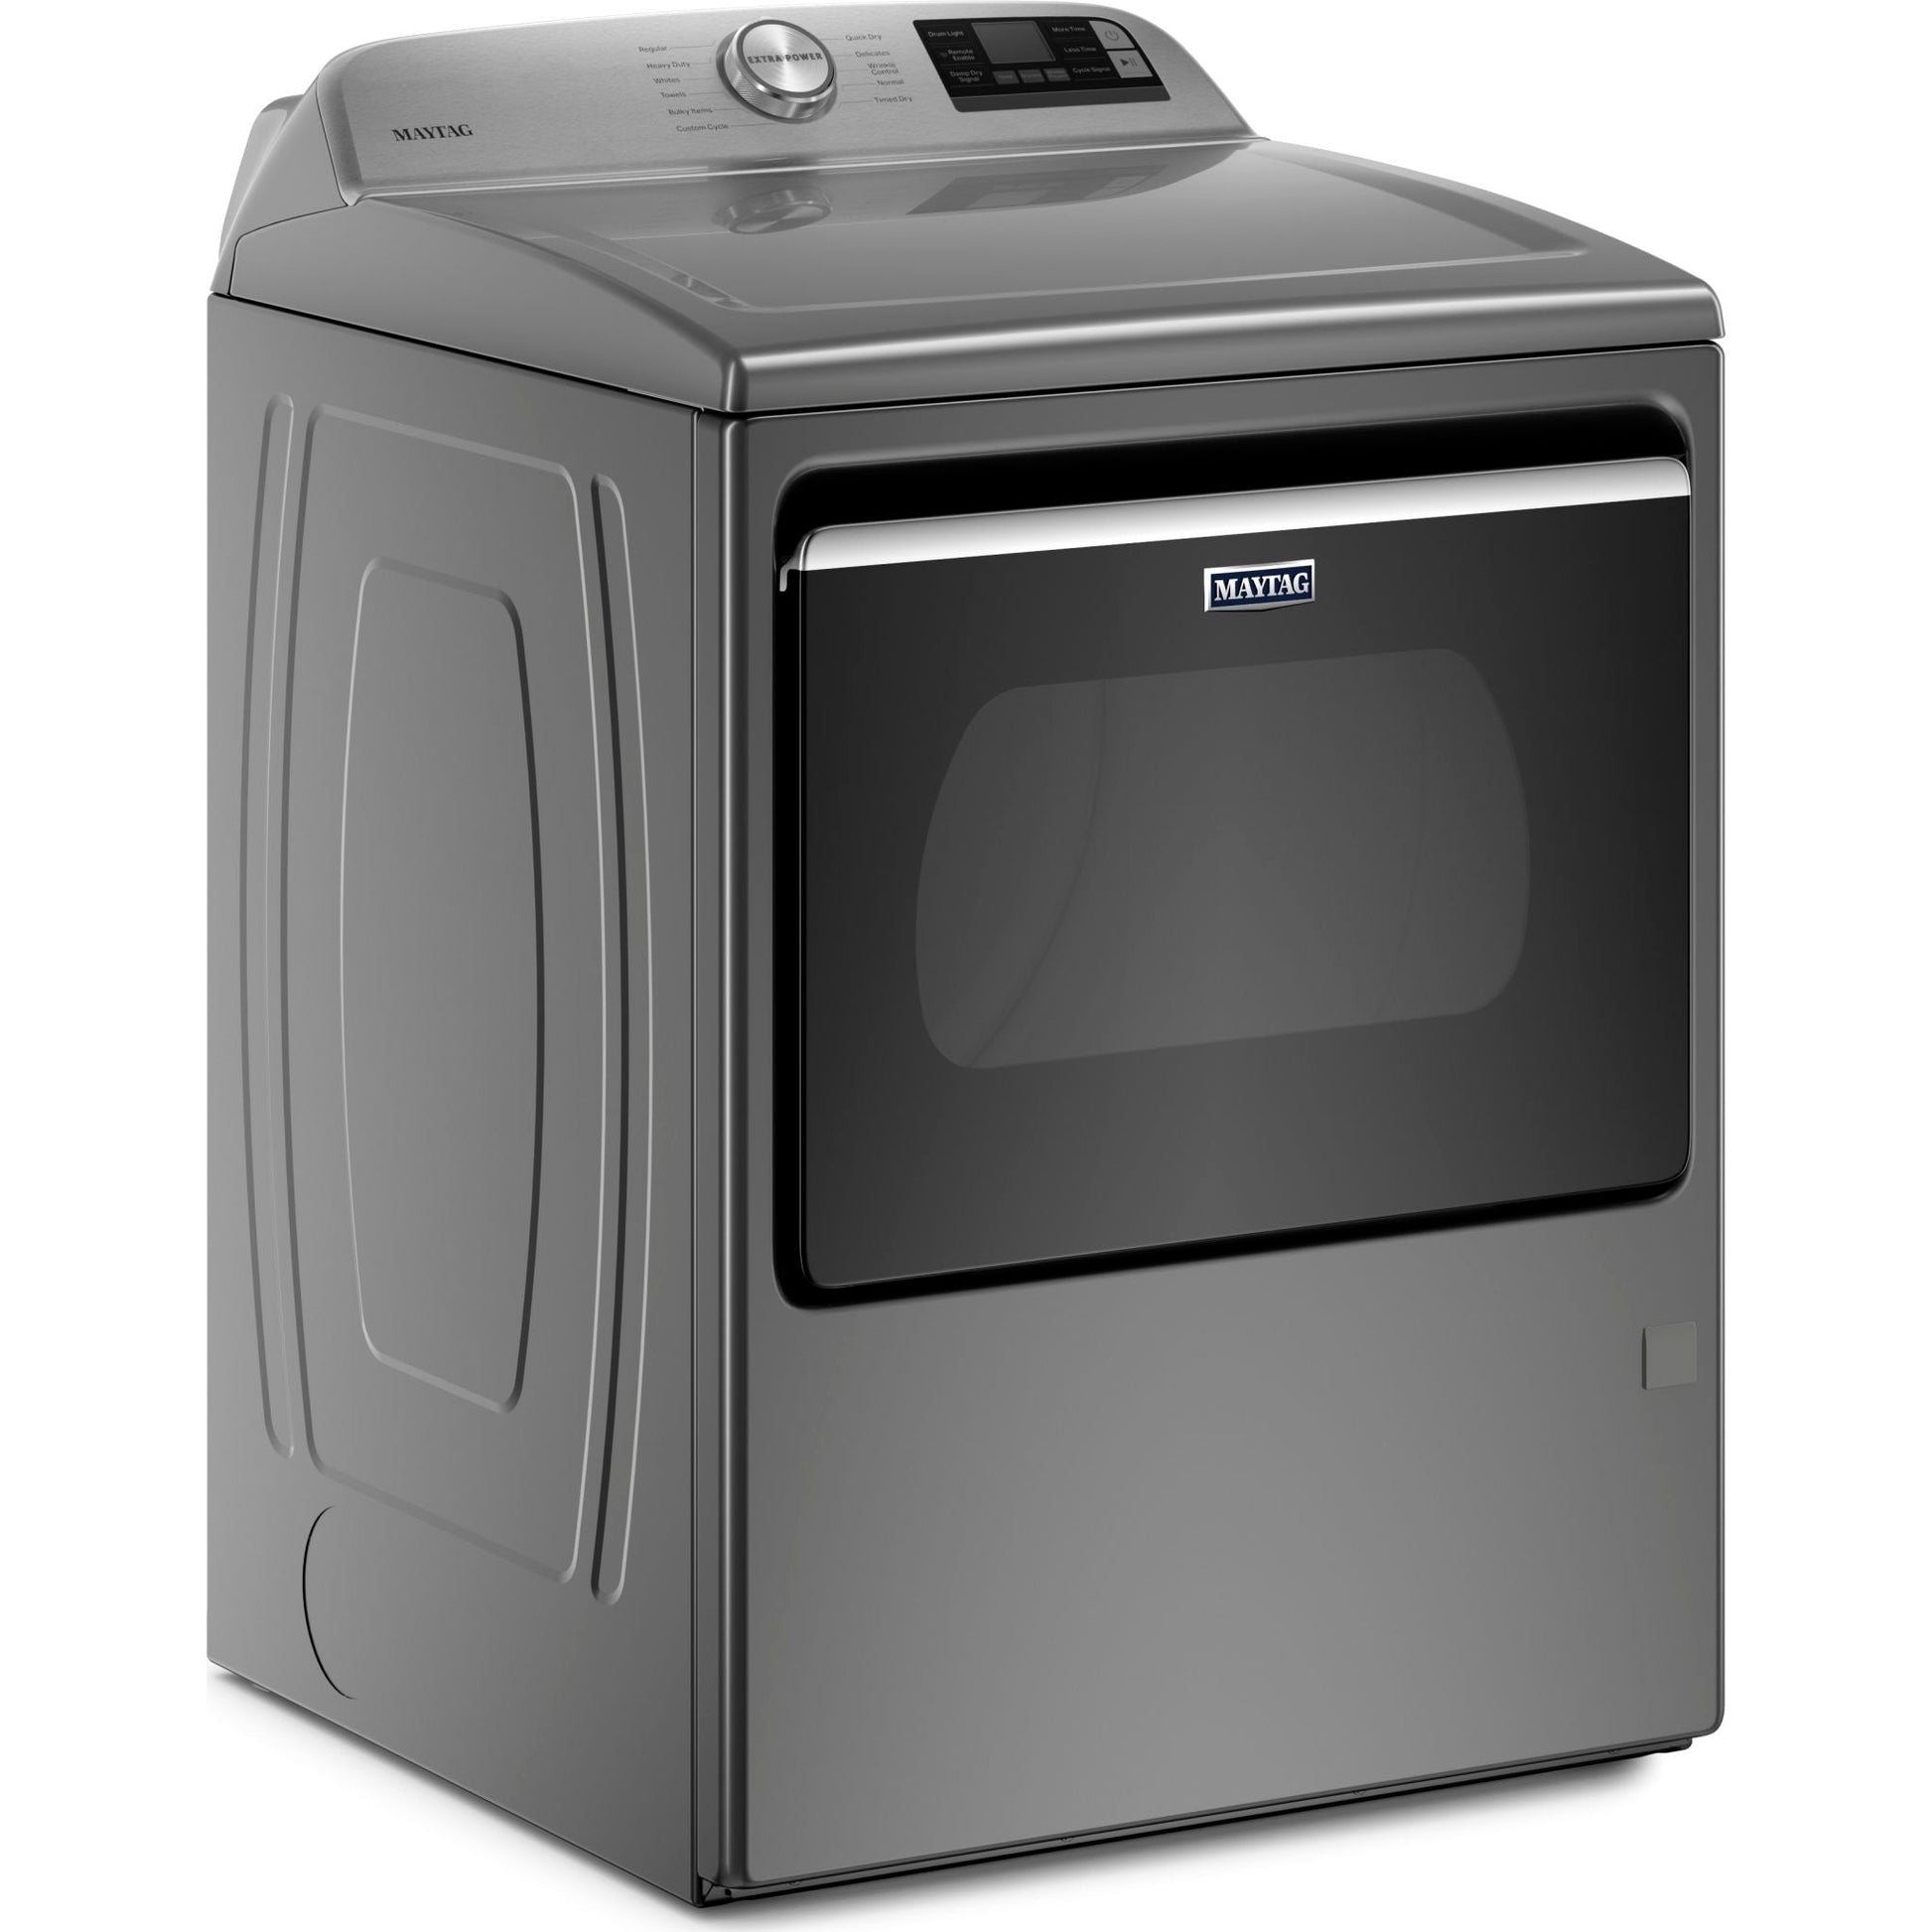 Maytag Gas Dryer (MGD6230HC) - Metallic Slate